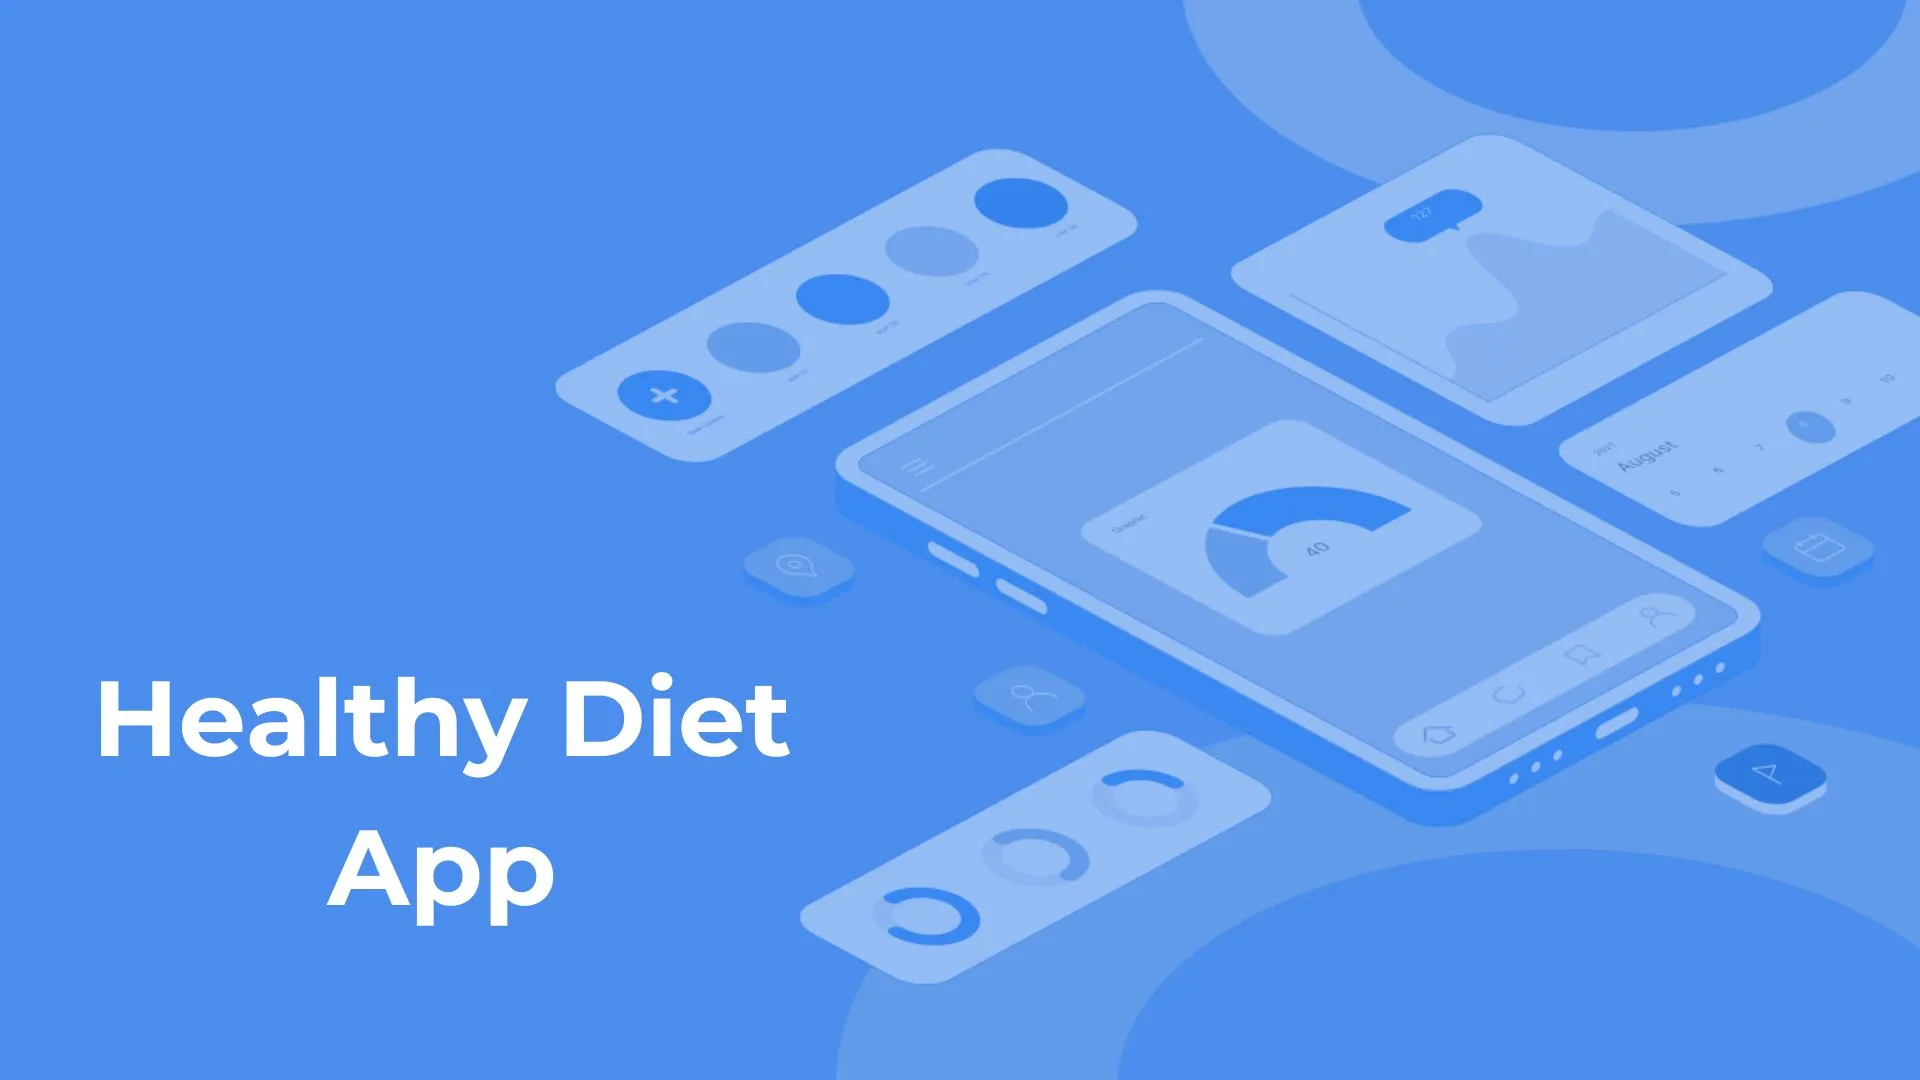 Healthy diet app